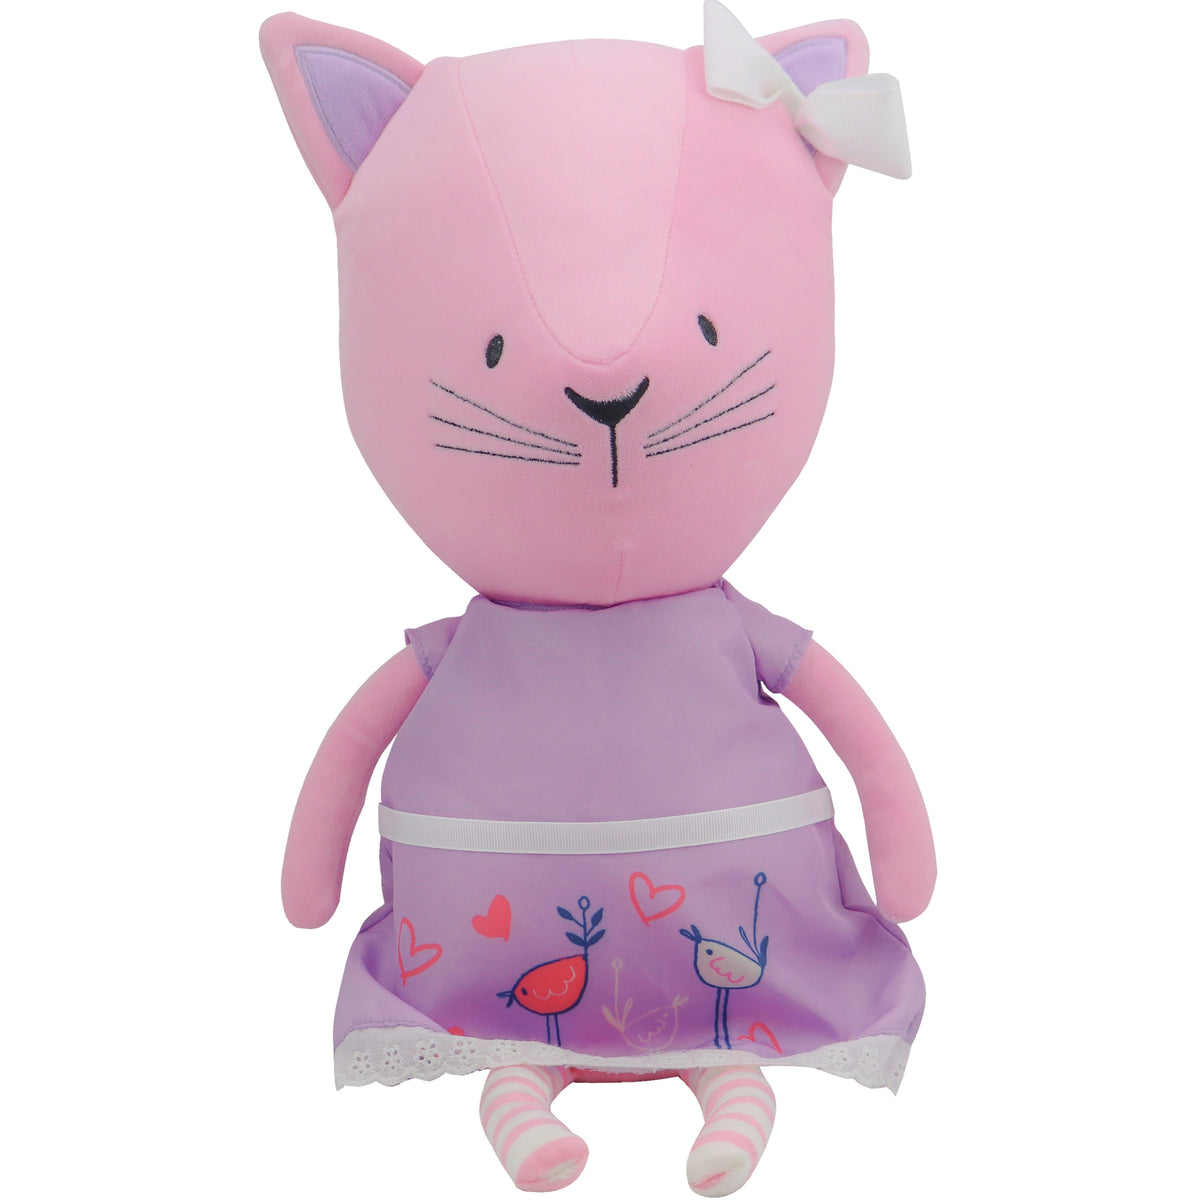 Goosewaddle Plush Lucy Kitty Plush Doll with Dress